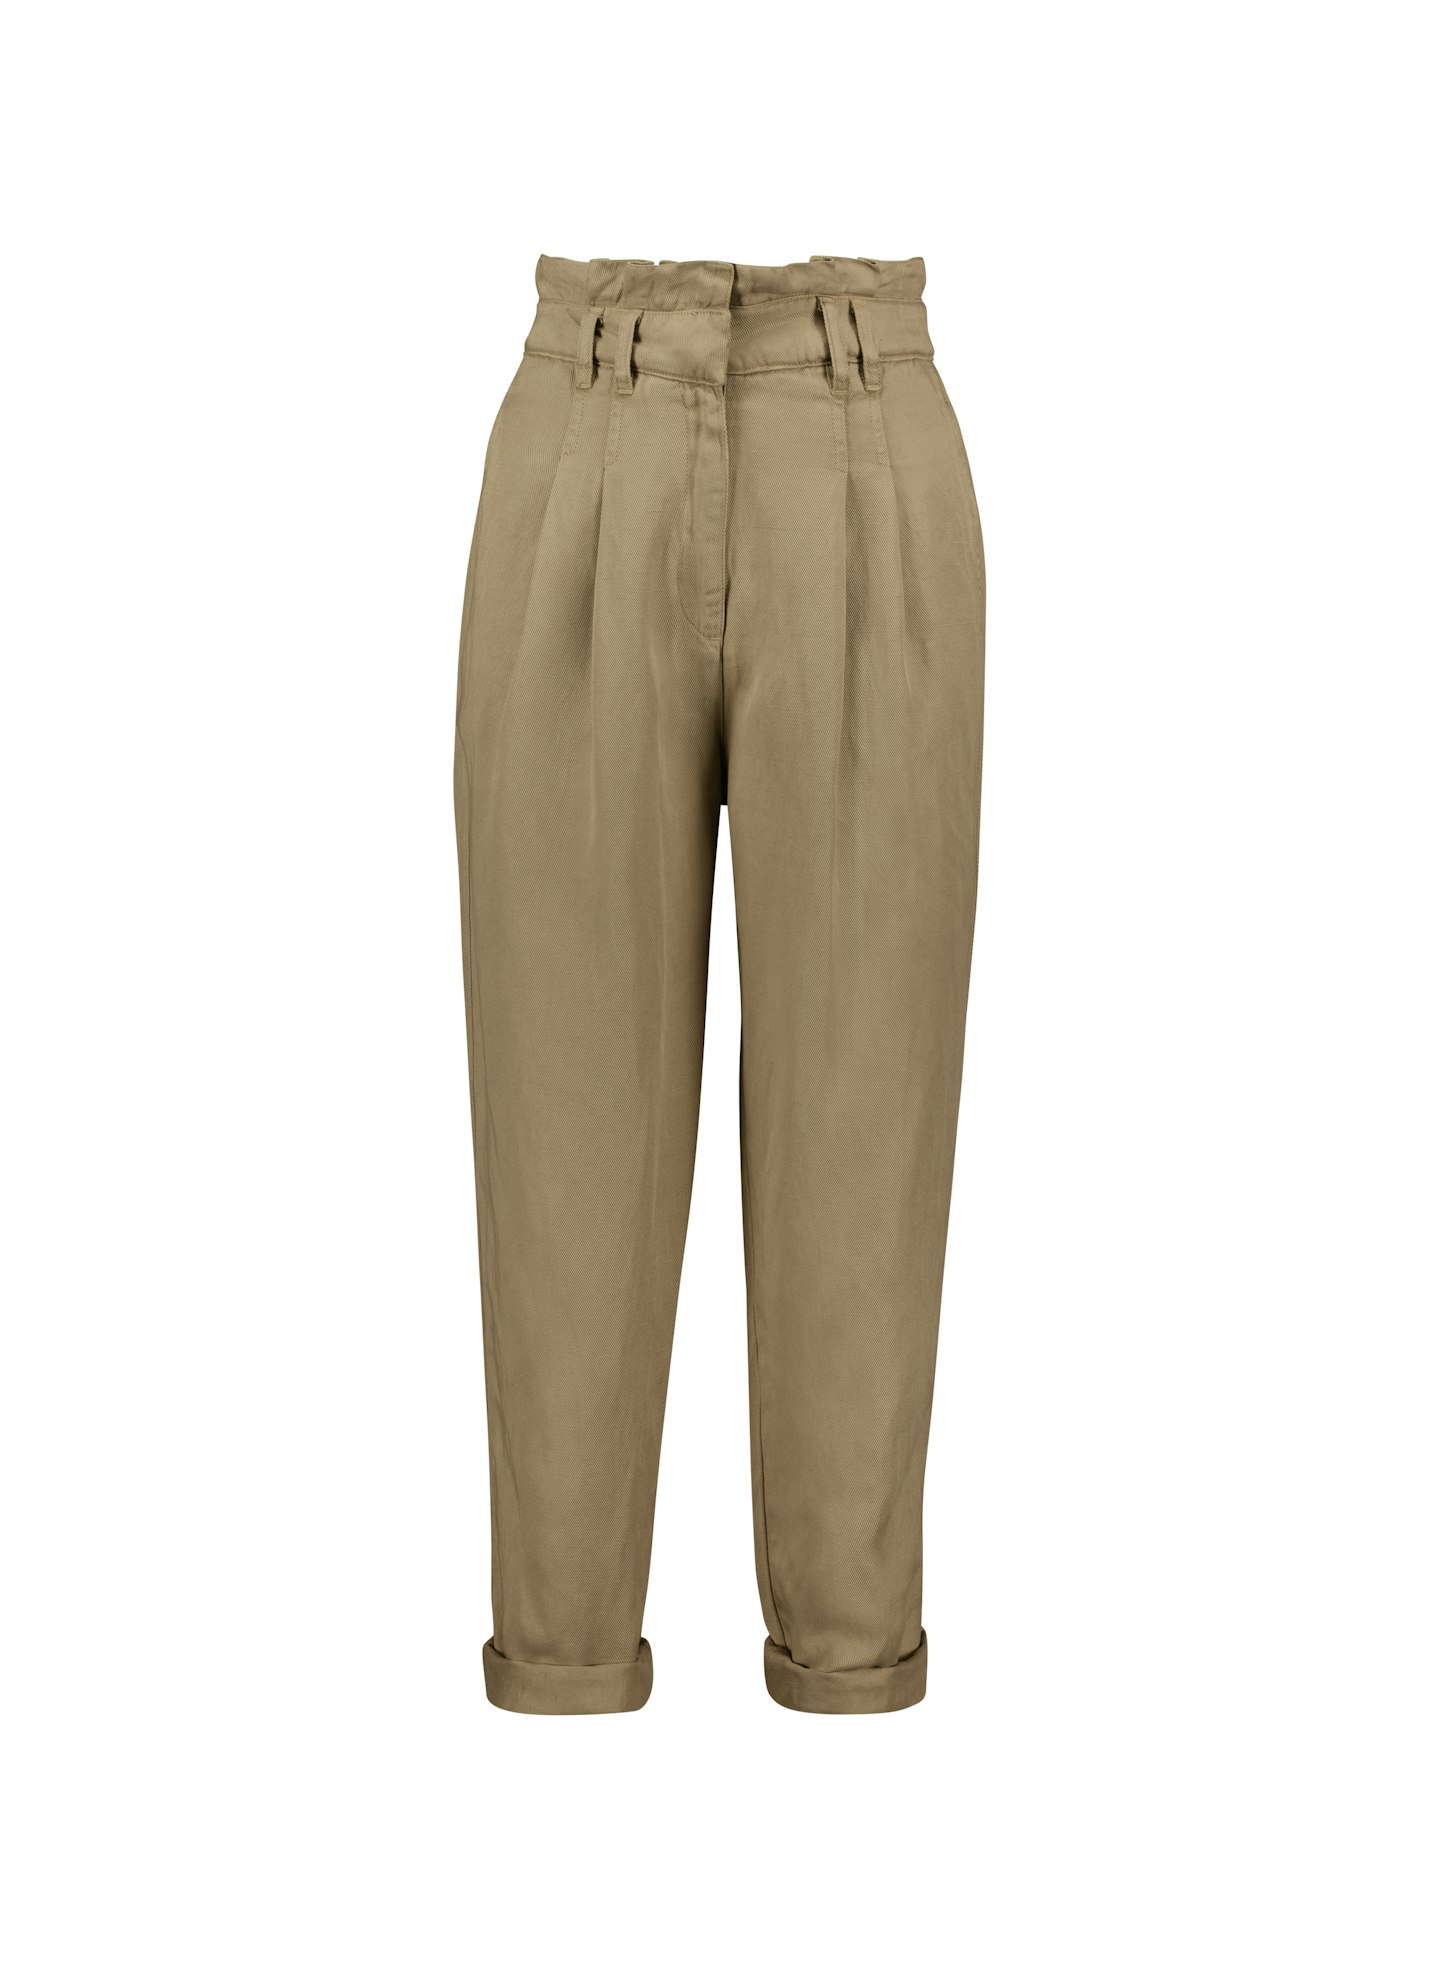 Caledonian Trousers with Tencelu2122, £109